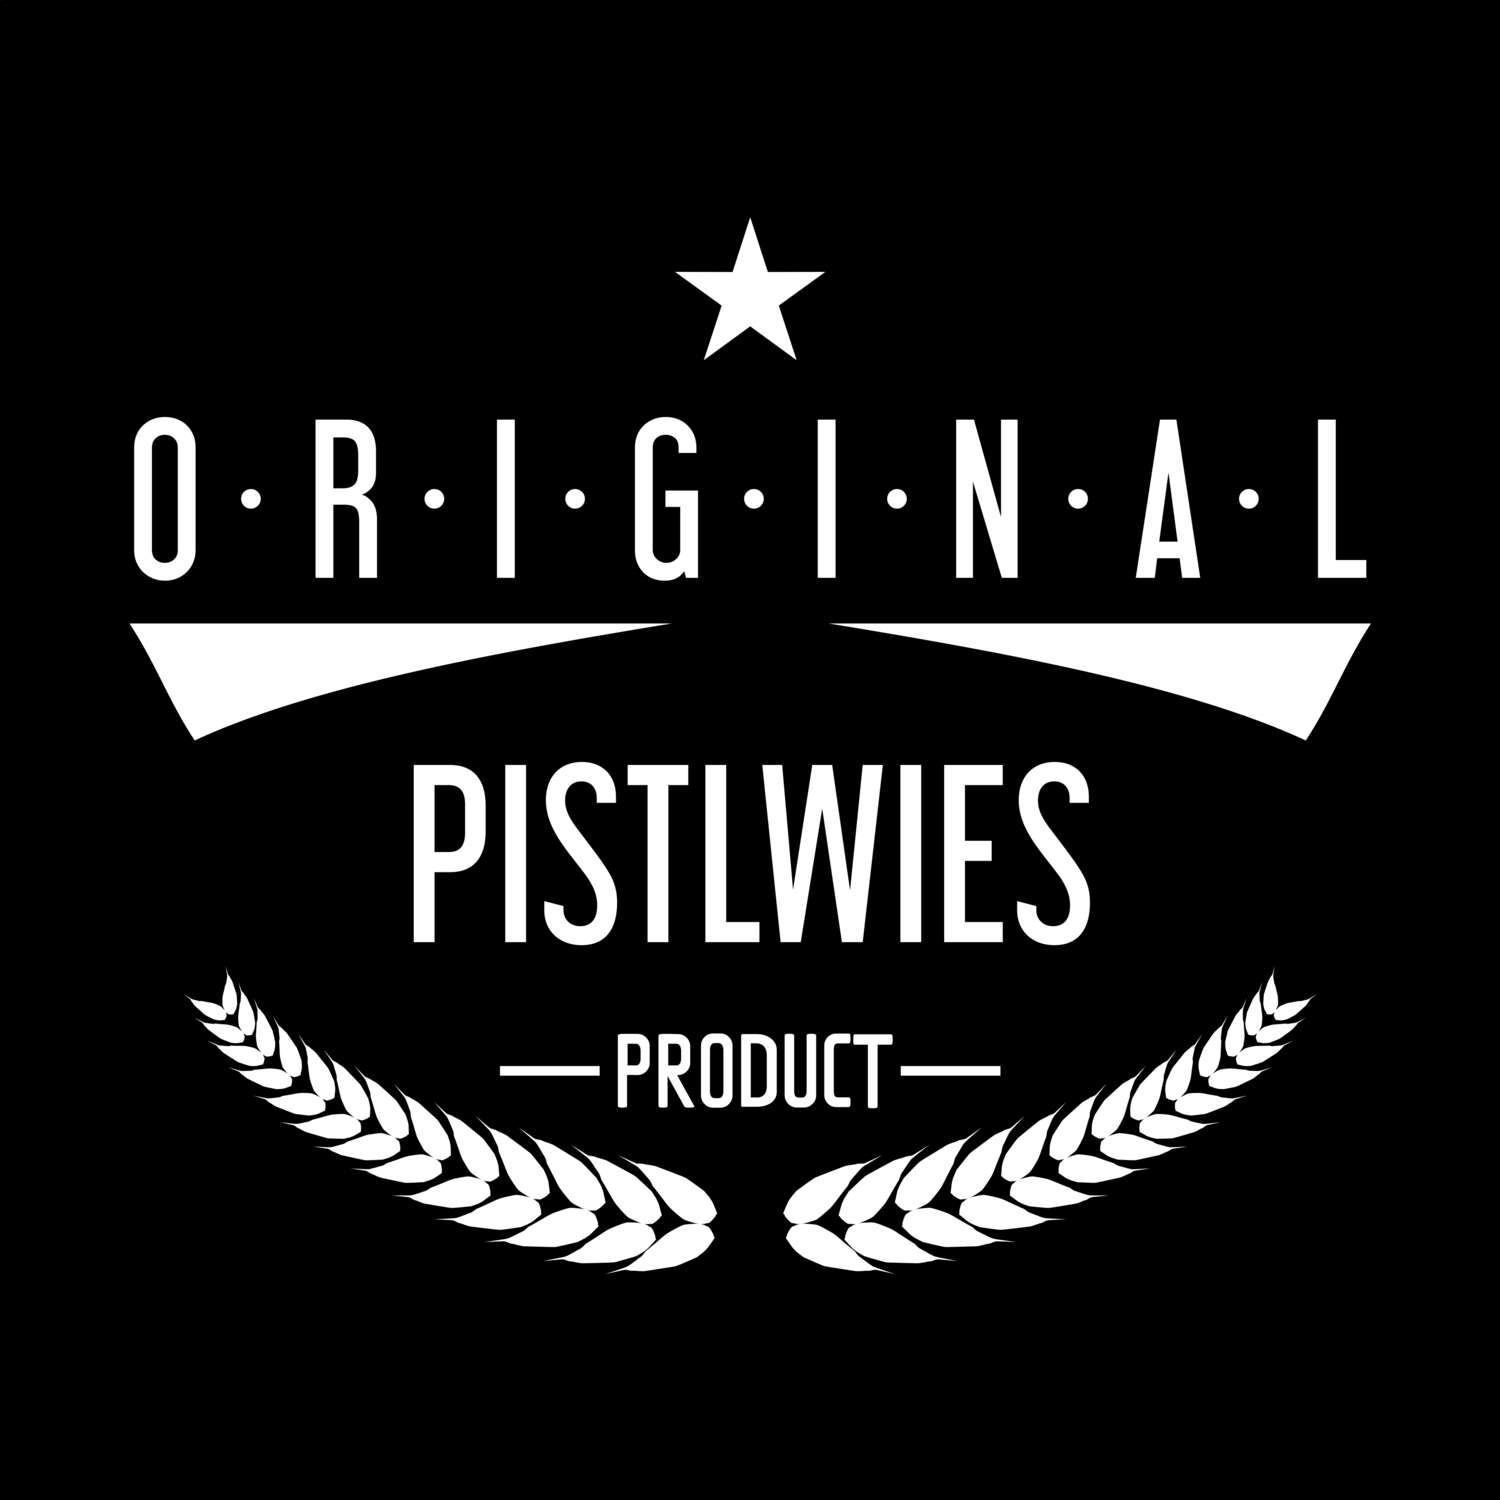 Pistlwies T-Shirt »Original Product«